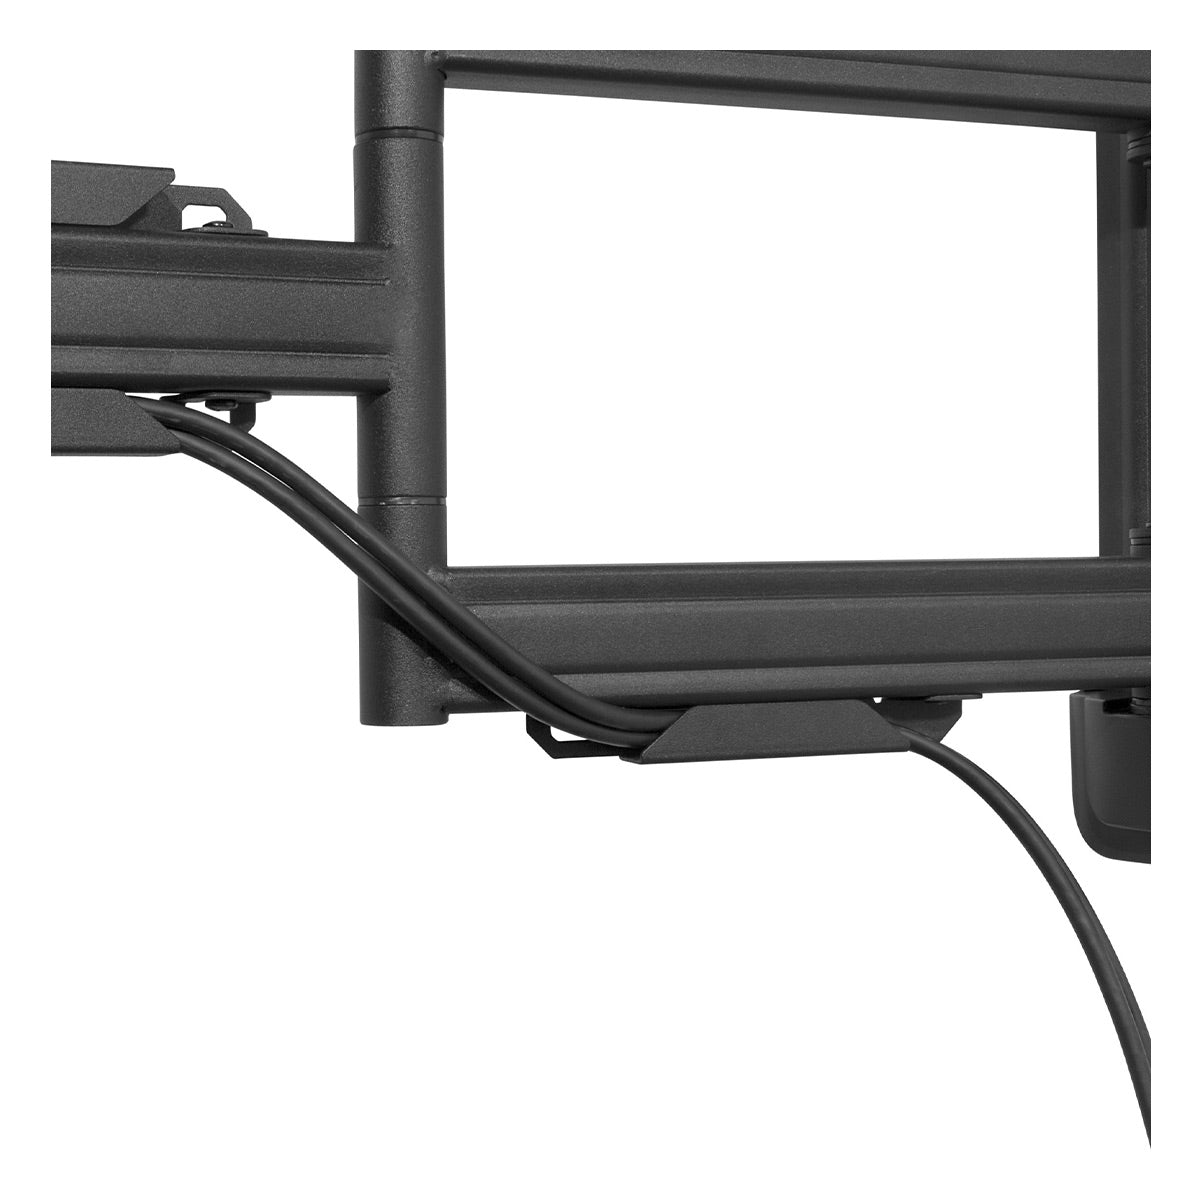 Kanto PS350 Articulating Full Motion Single Stud TV Mount for 37" - 60" TV (Black)